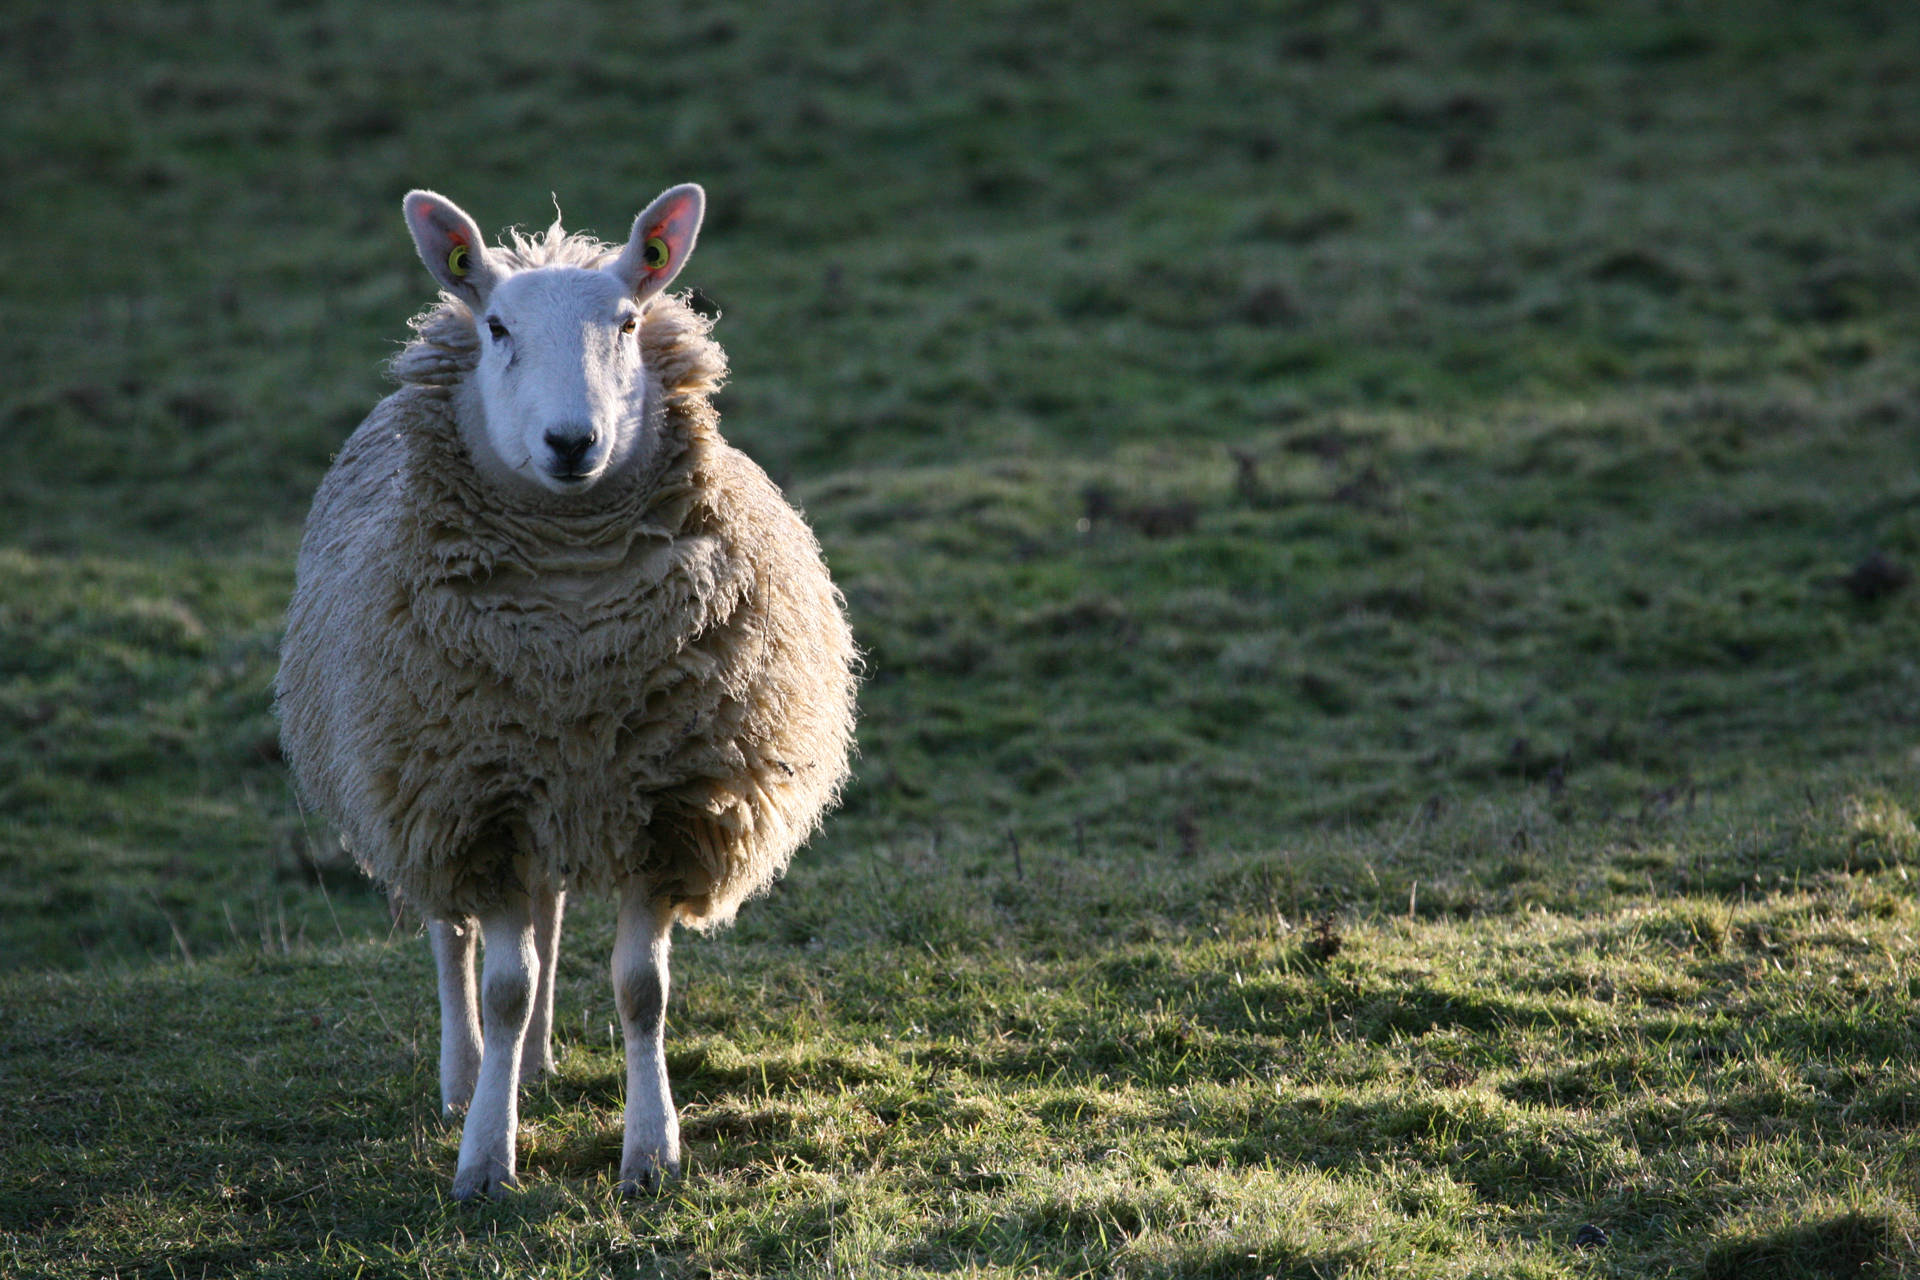 Sheep In Grass Field Background